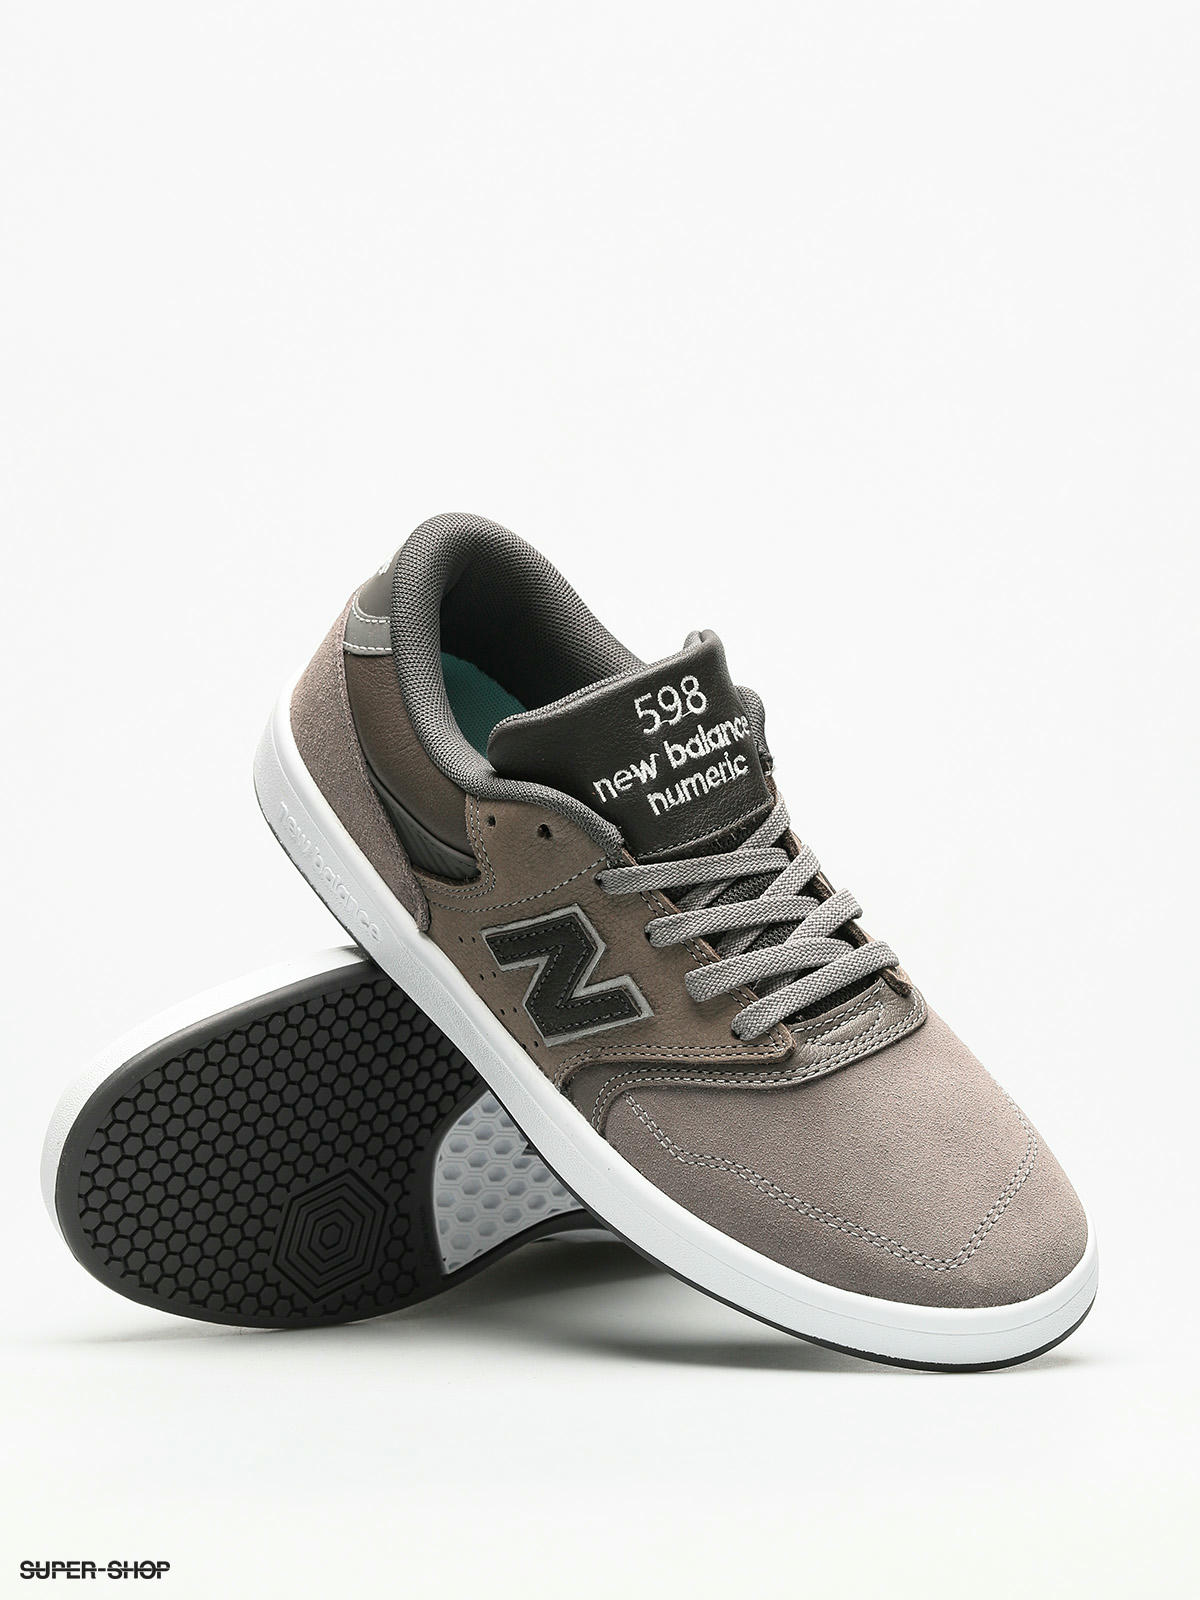 New Balance Shoes 598 (grey)